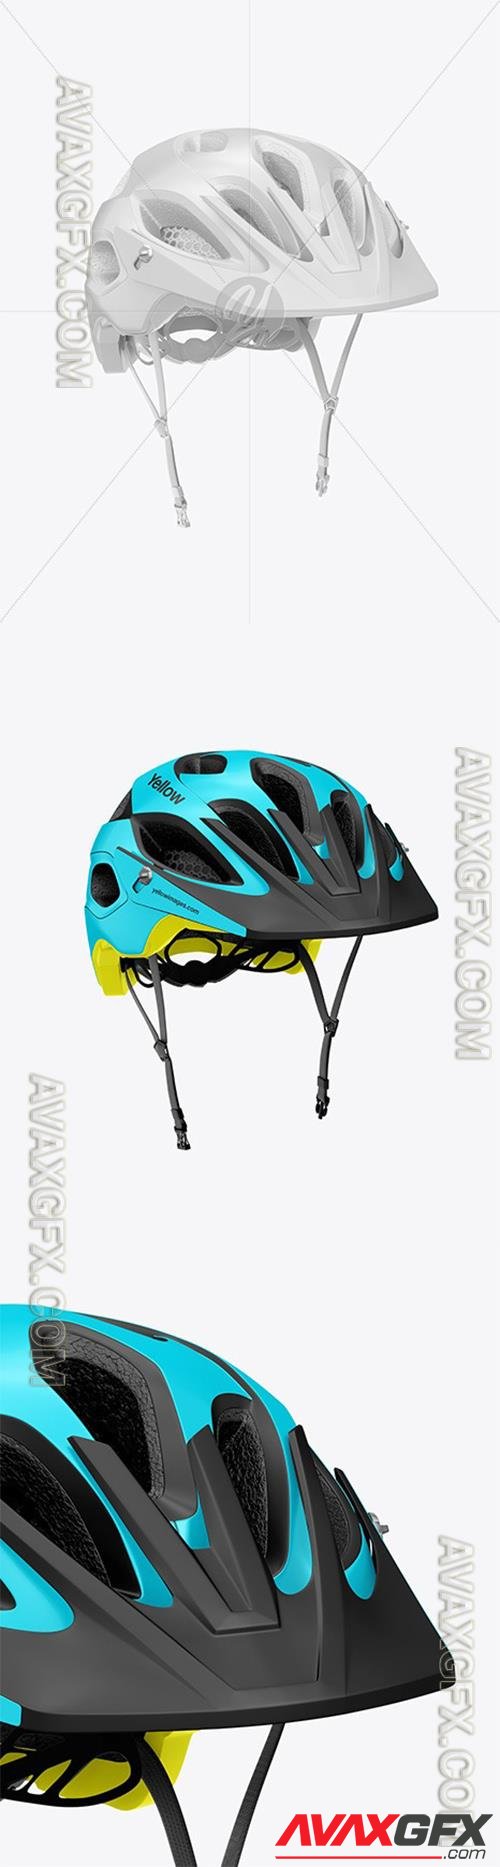 Cycling Helmet Mockup 97293